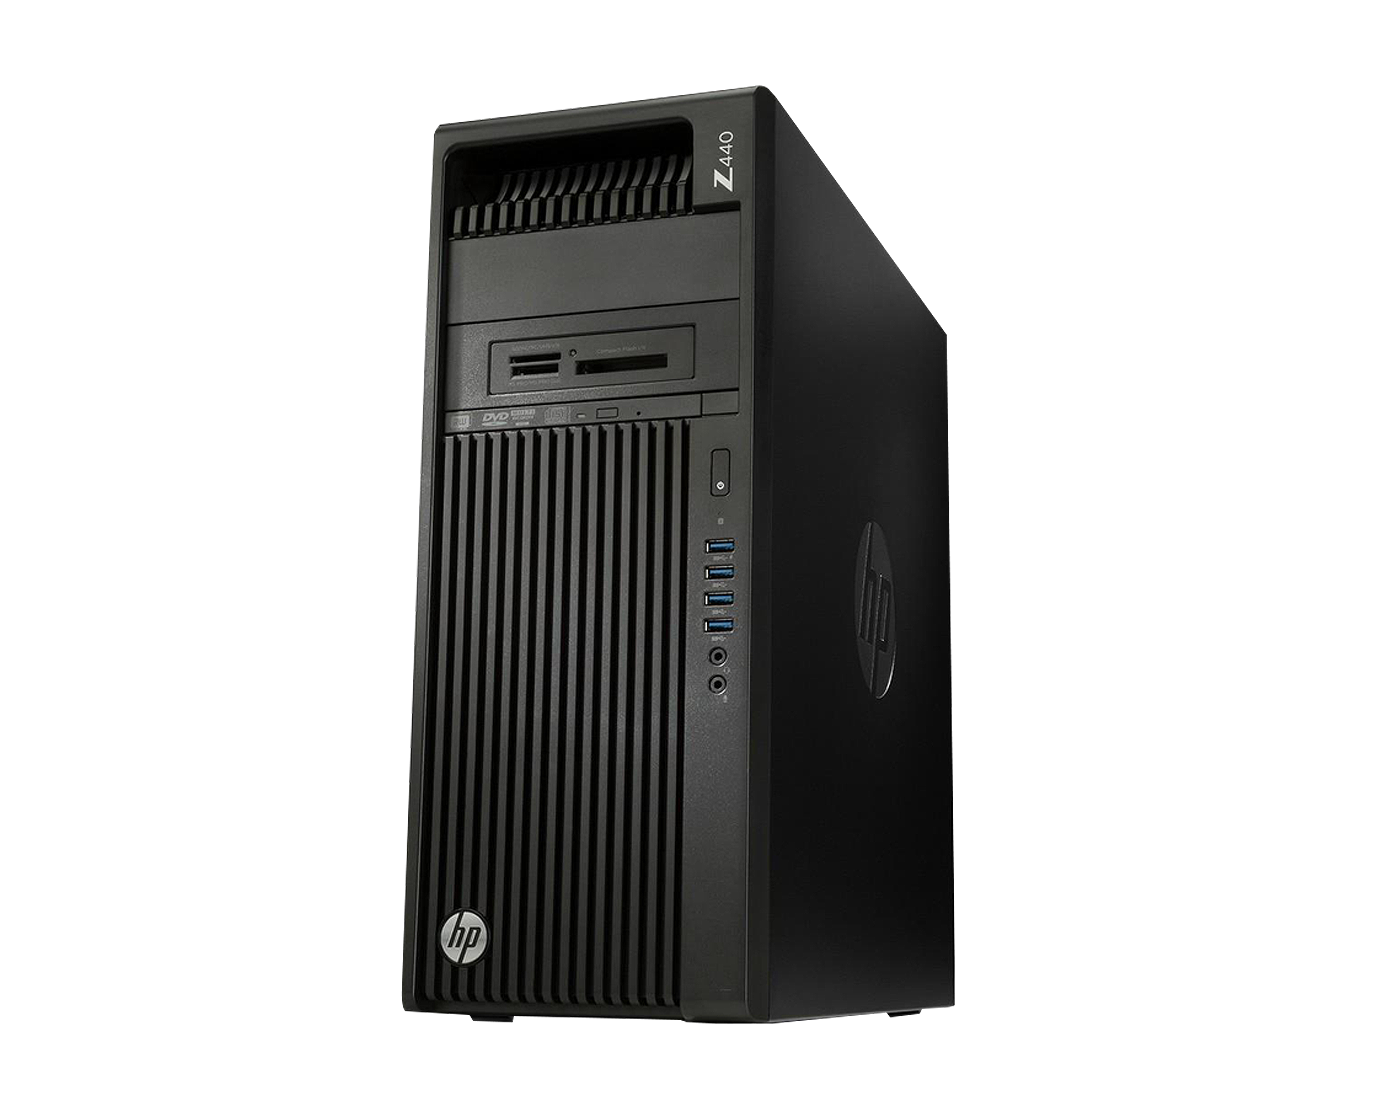 HP Z440 / Xeon E5 1620v3 3,5ghz / 32Gb ram / 512Gb ssd + 500Gb / Nvidia Quadro K2200 4Gb / Win 10 Pro / ¡Liquidación!